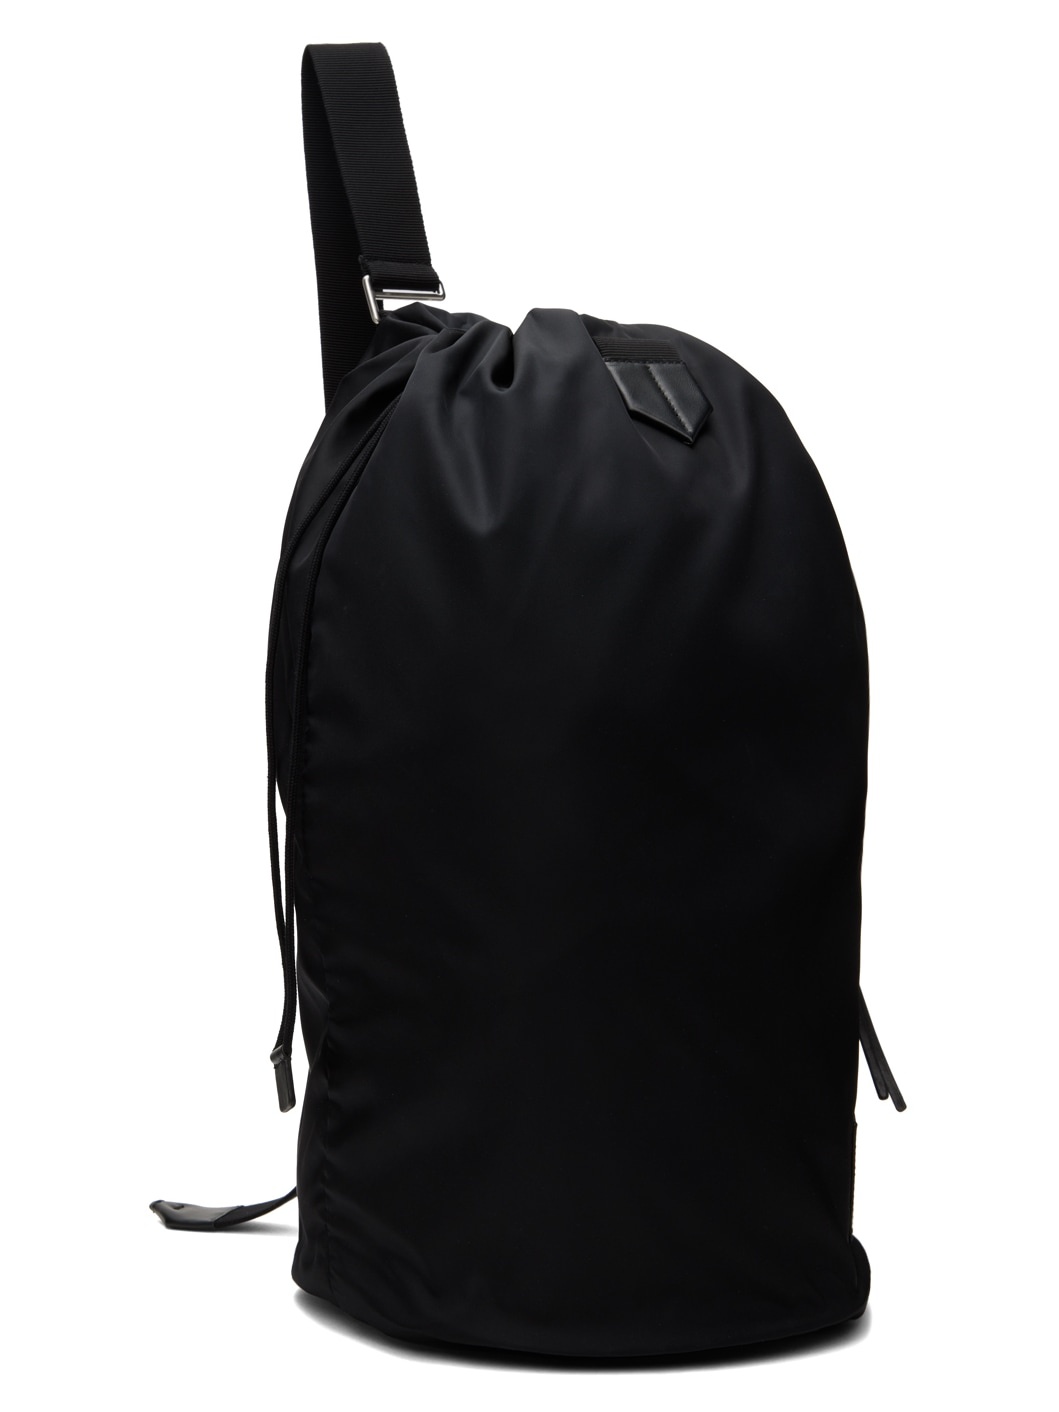 Black Drawstring Bag - 2